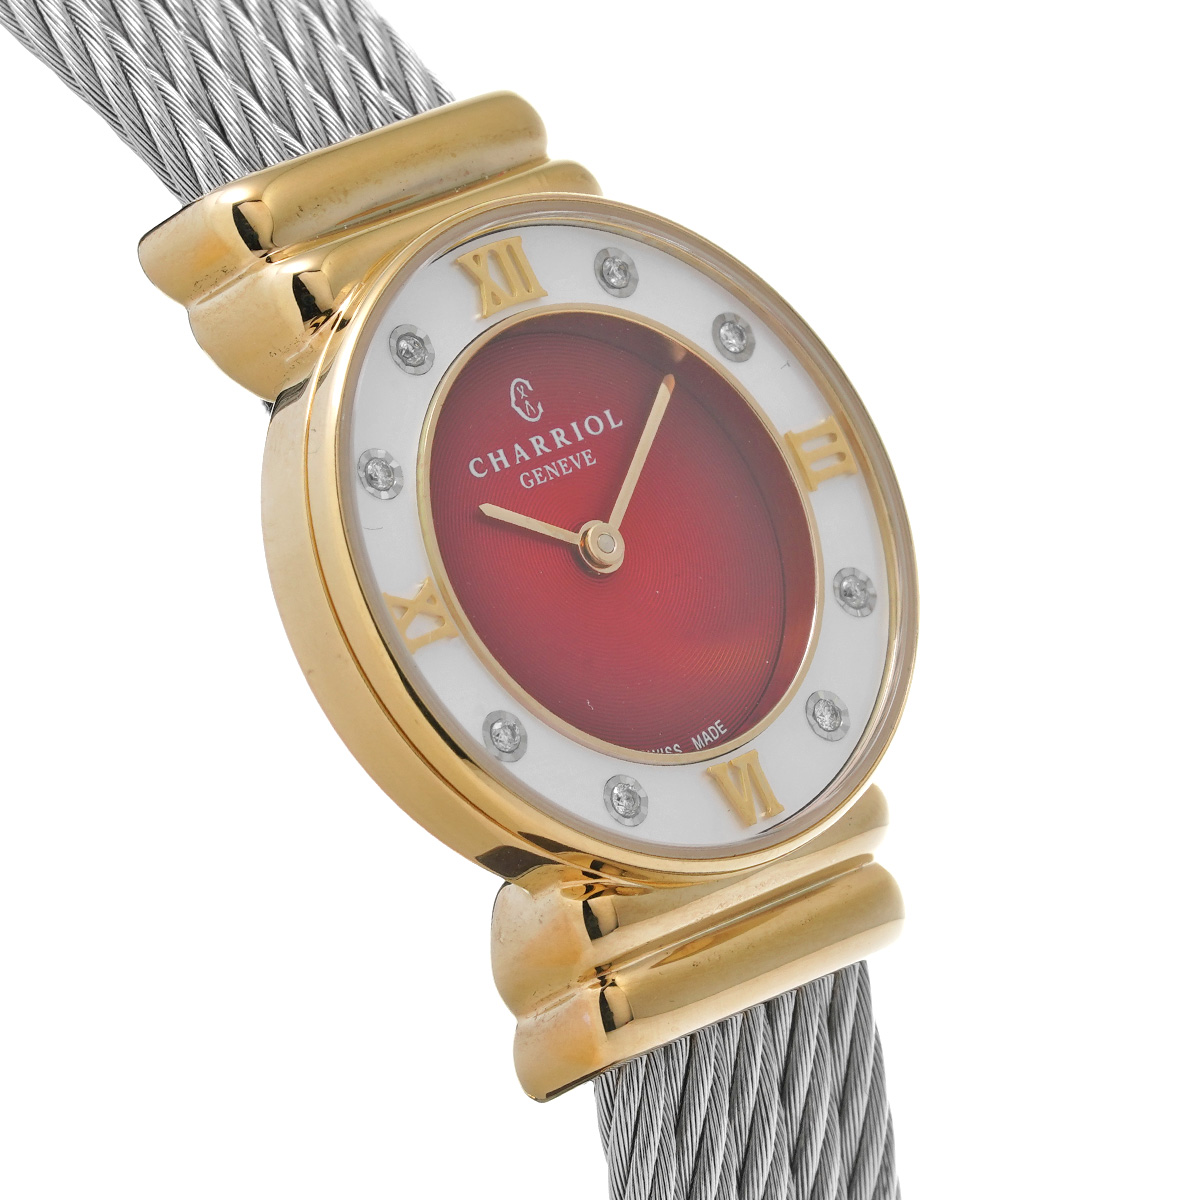 CHARRIOL　サントロペ ST028.3 ステンレススチール レディース 腕時計